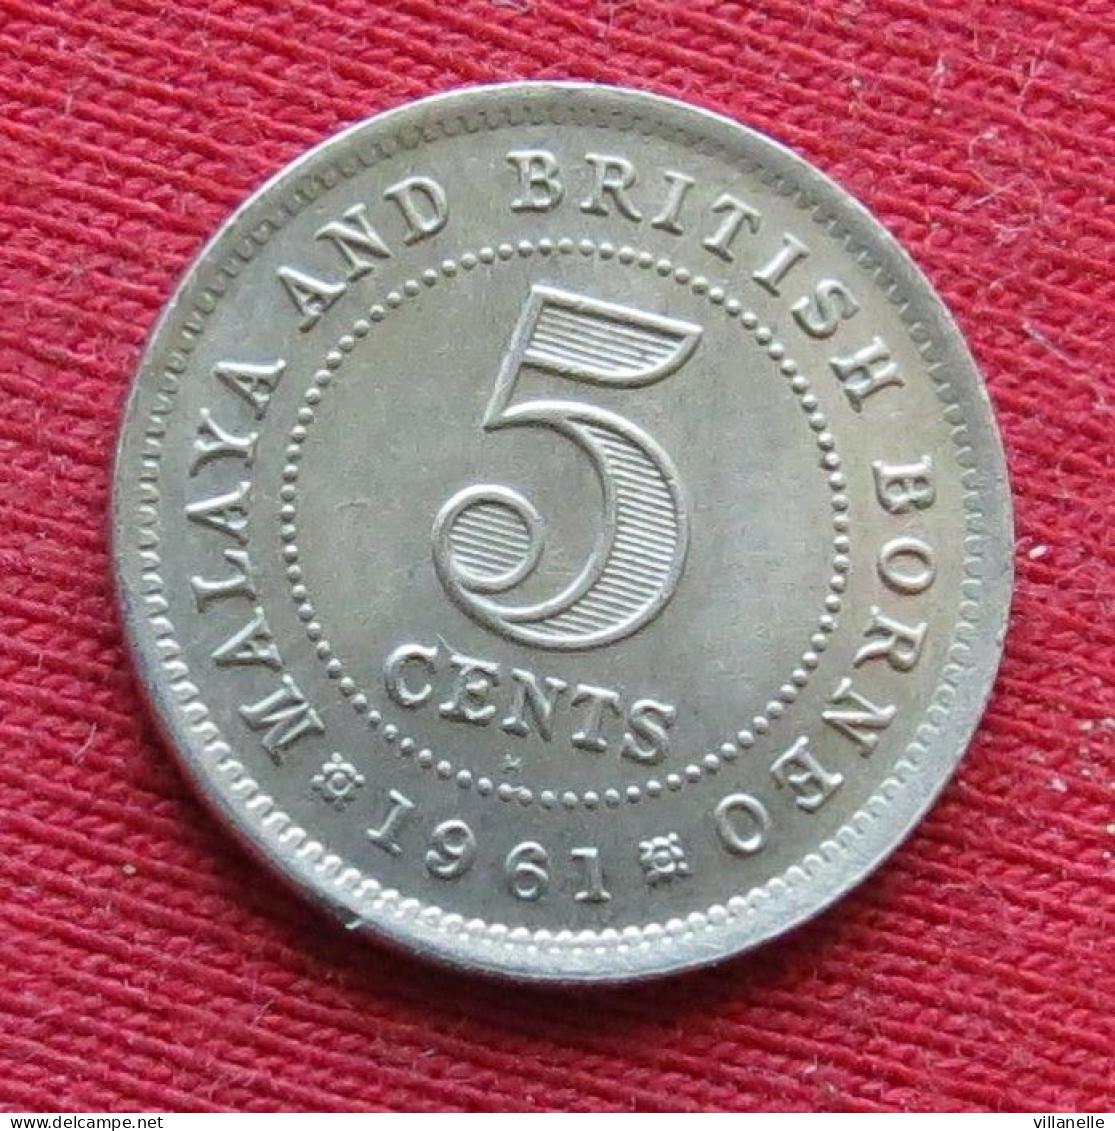 Malaya And British Borneo 5 Cents 1961 H W ºº - Malaysia